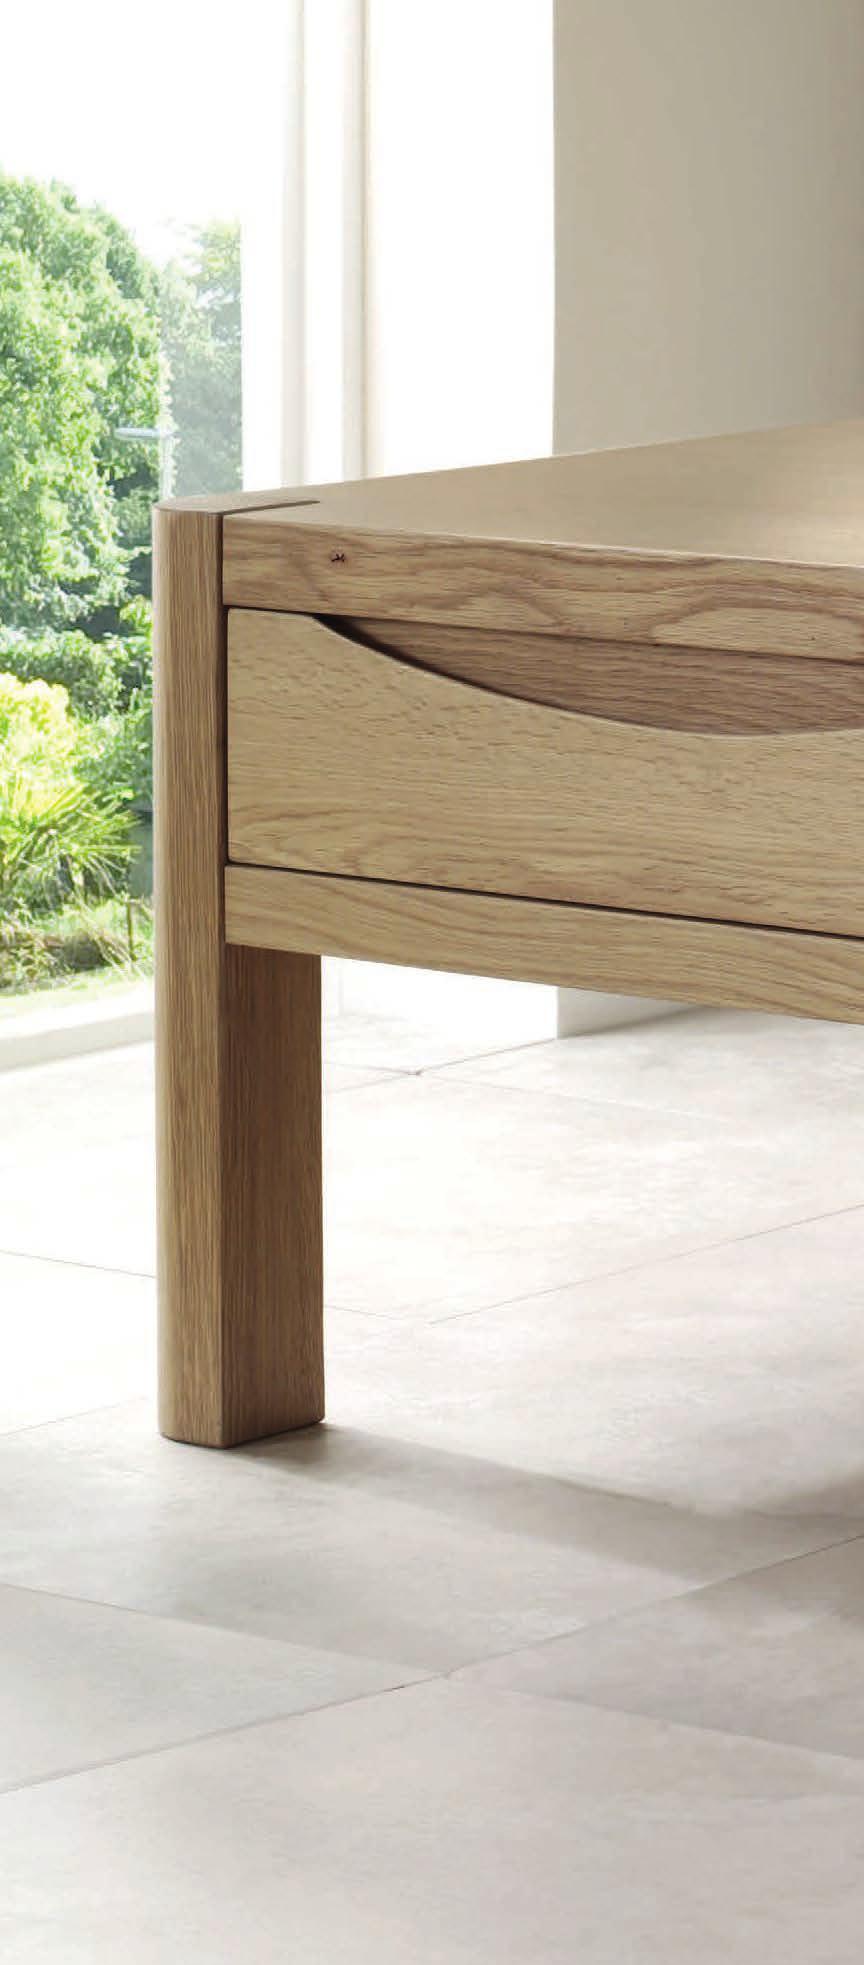 Timeless modern designs crafted in fine Solid oak and oak veneers.